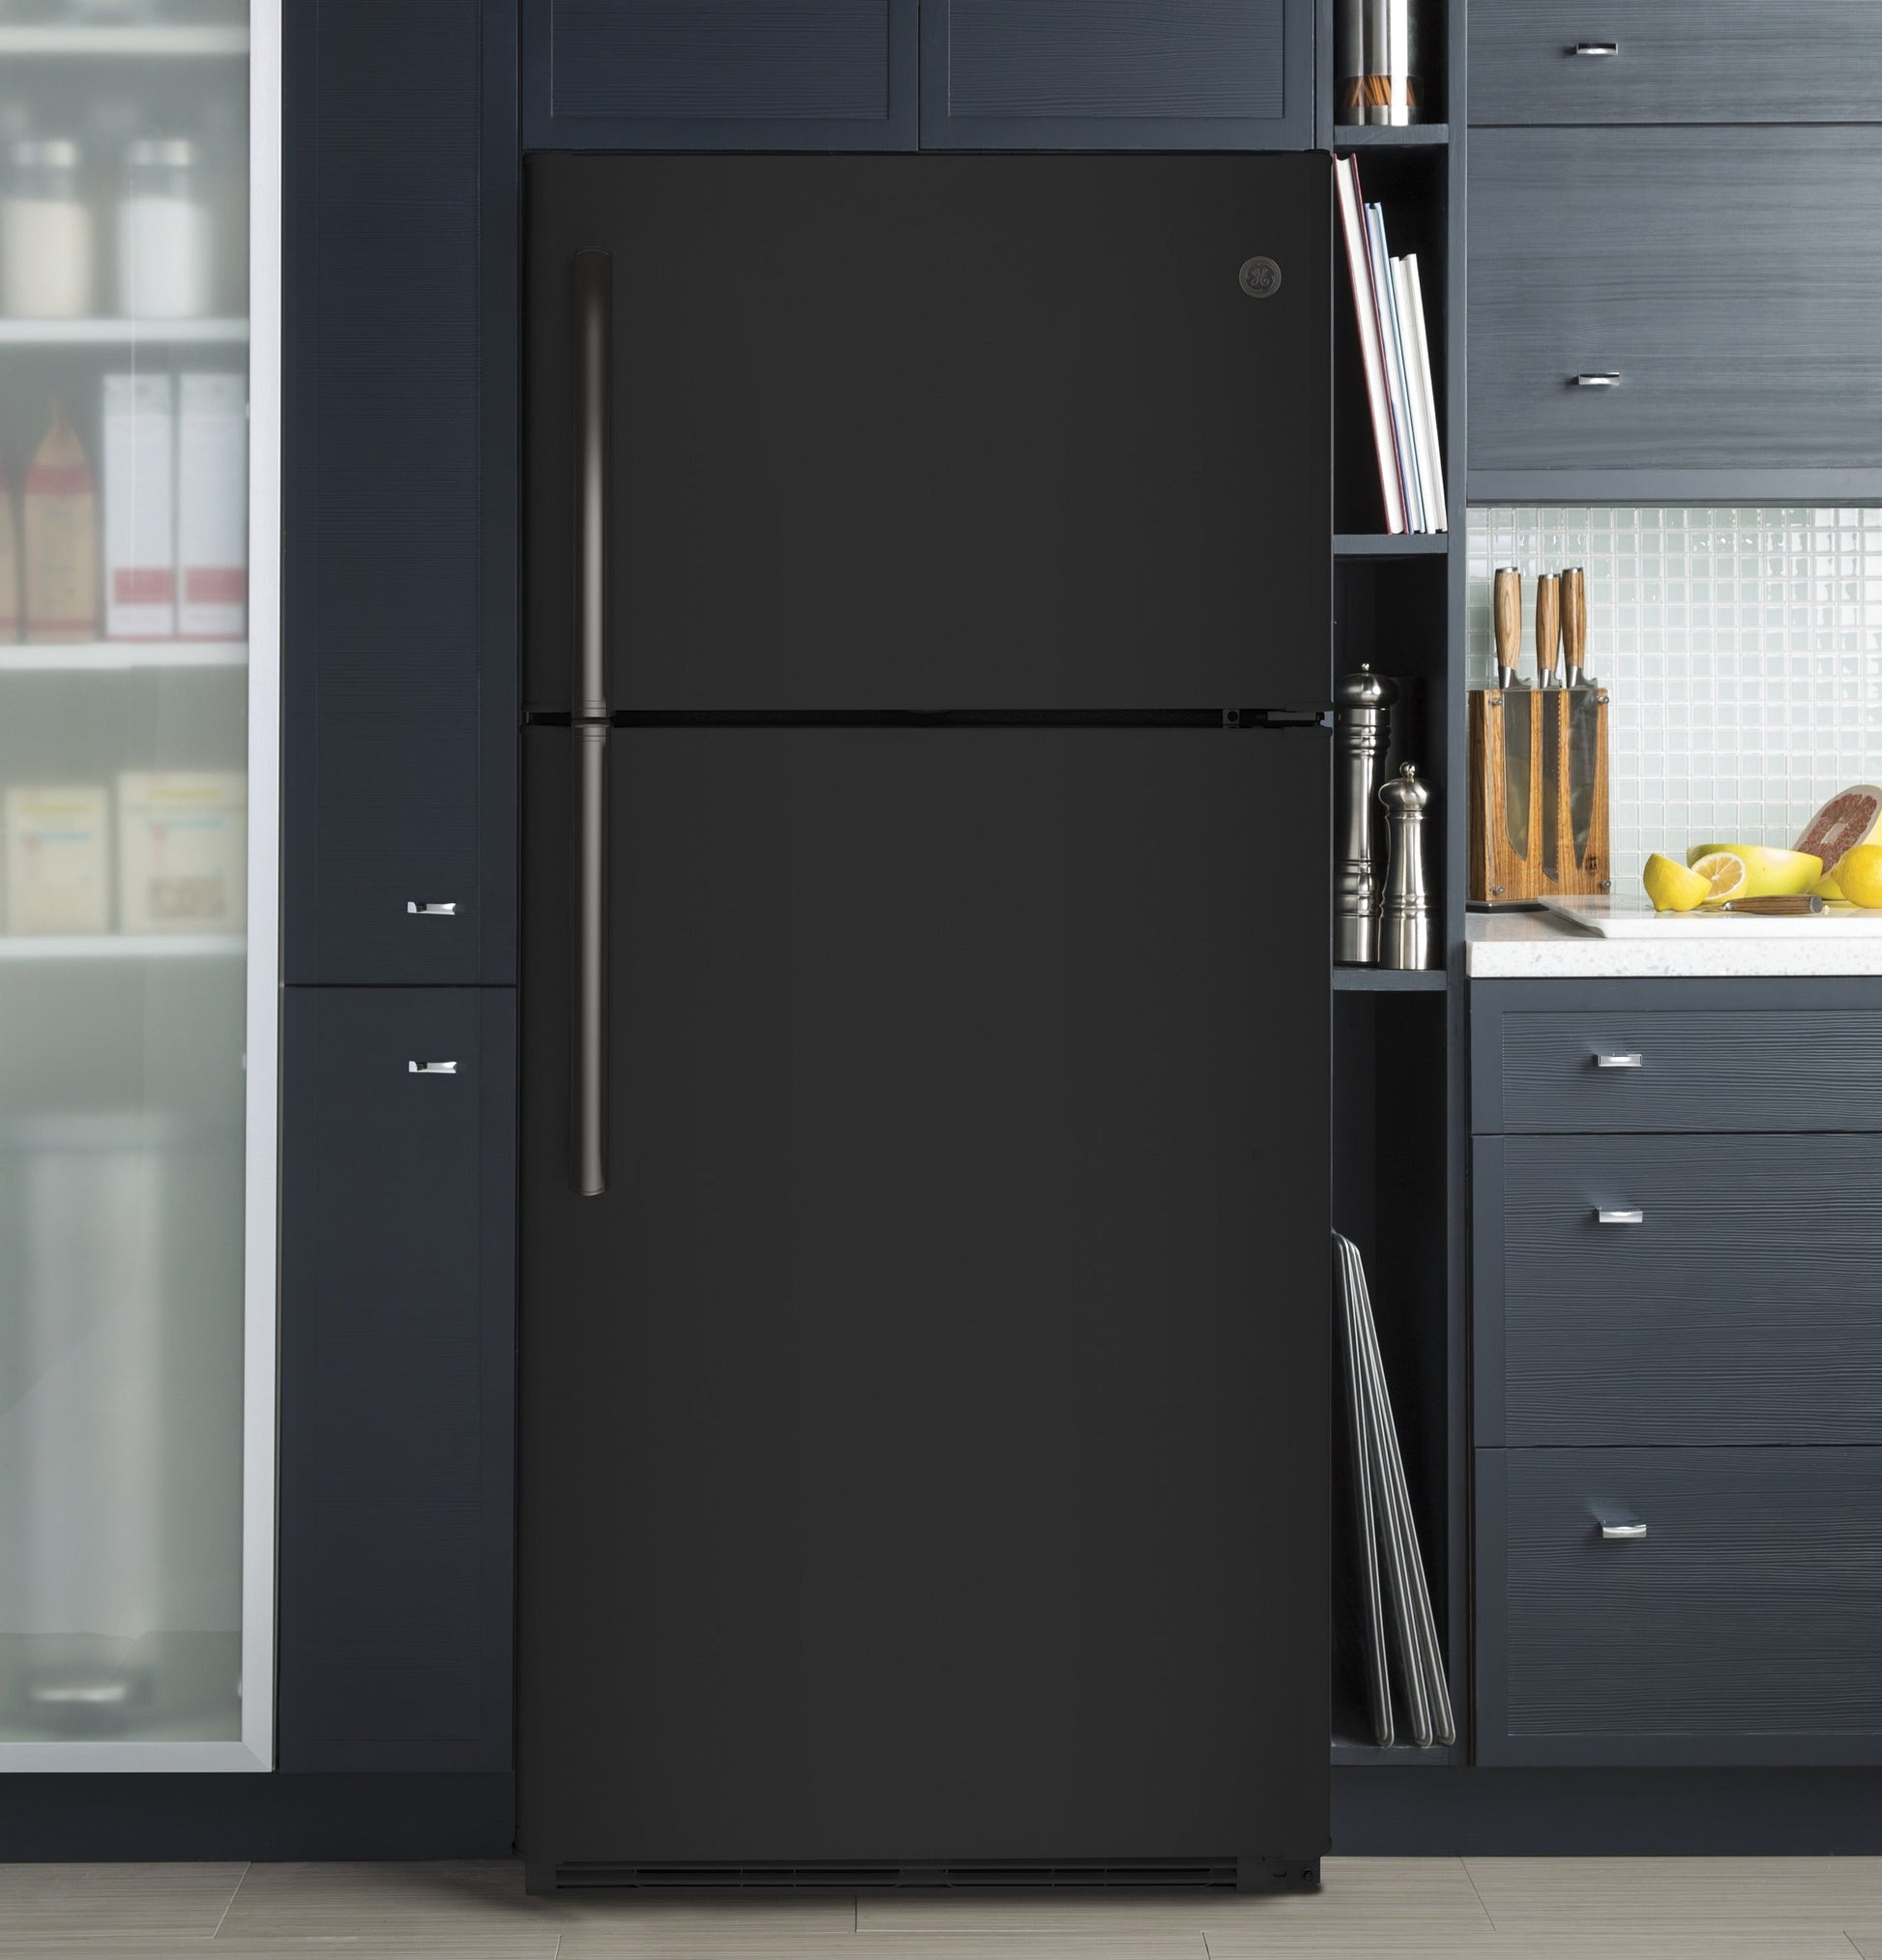 GE® Energy Star 18 Cu. Ft. Top-Freezer Refrigerator Black - GTE18FTLKBB